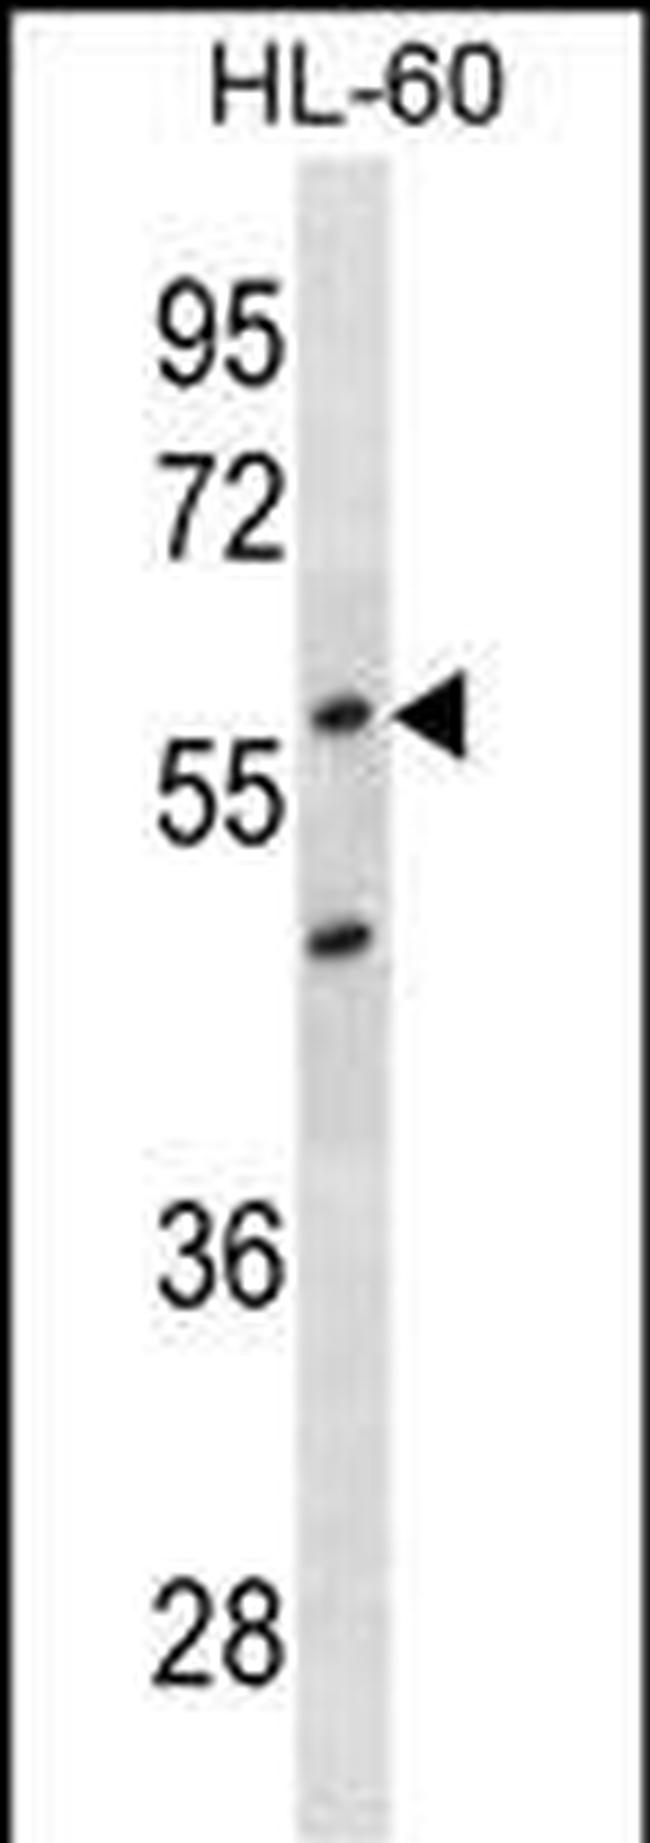 p57 Kip2 Monoclonal Antibody (522CT9.5.1)